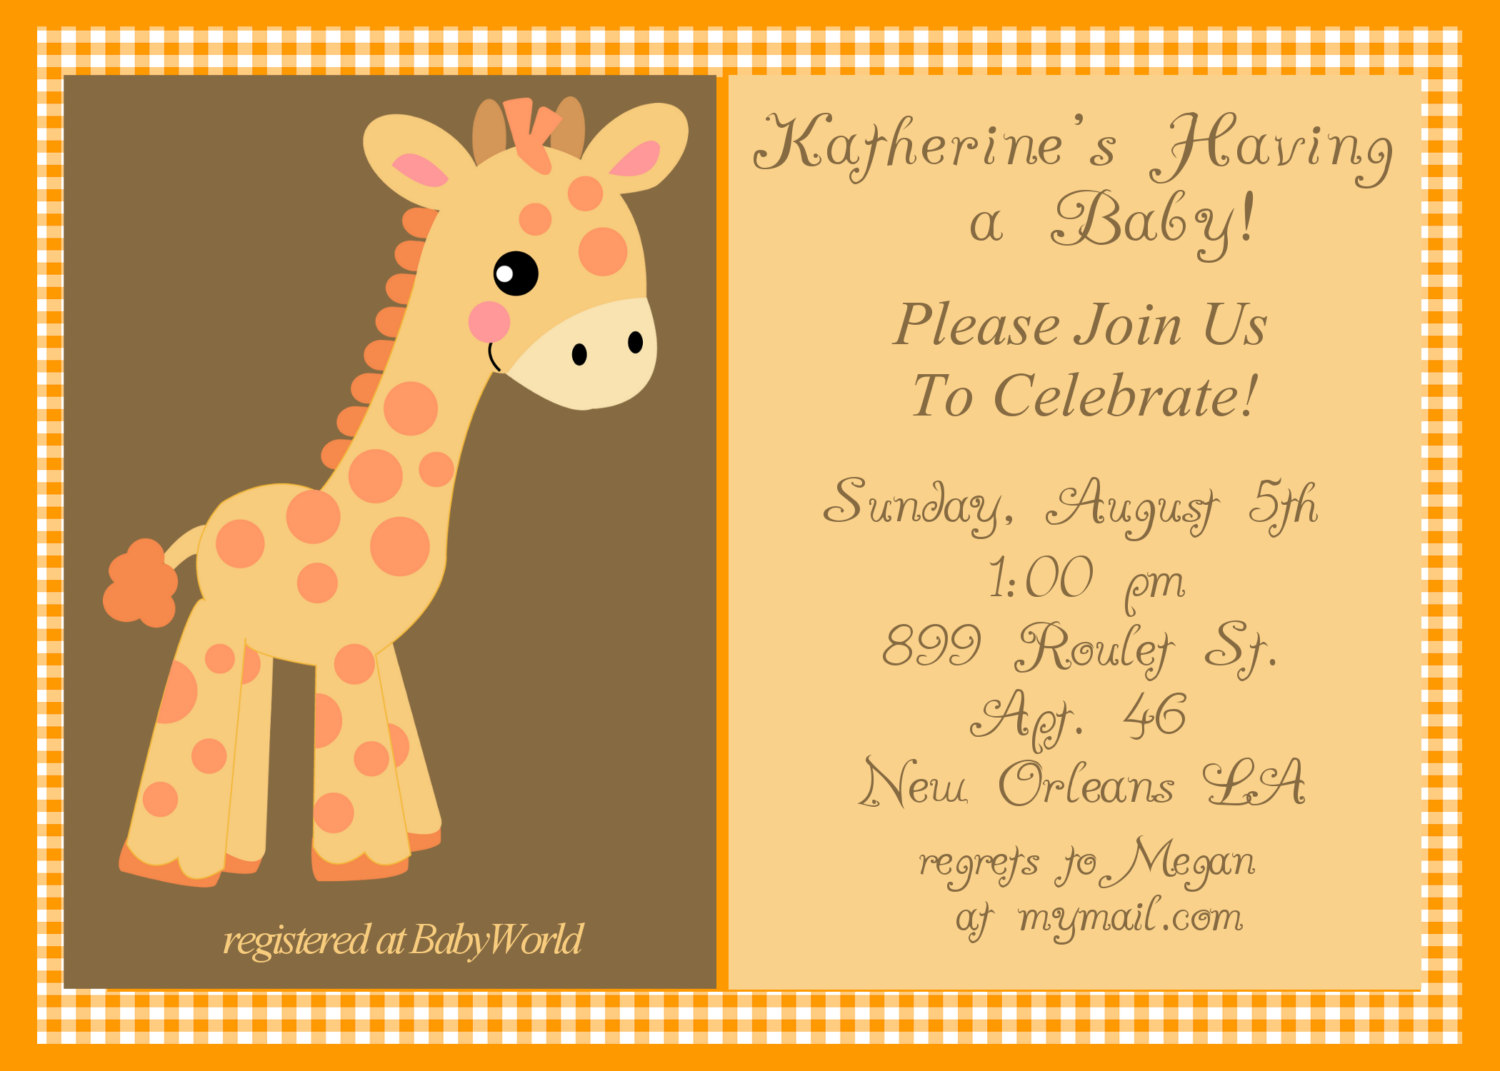 giraffe-baby-shower-invitations-dolanpedia-invitations-ideas